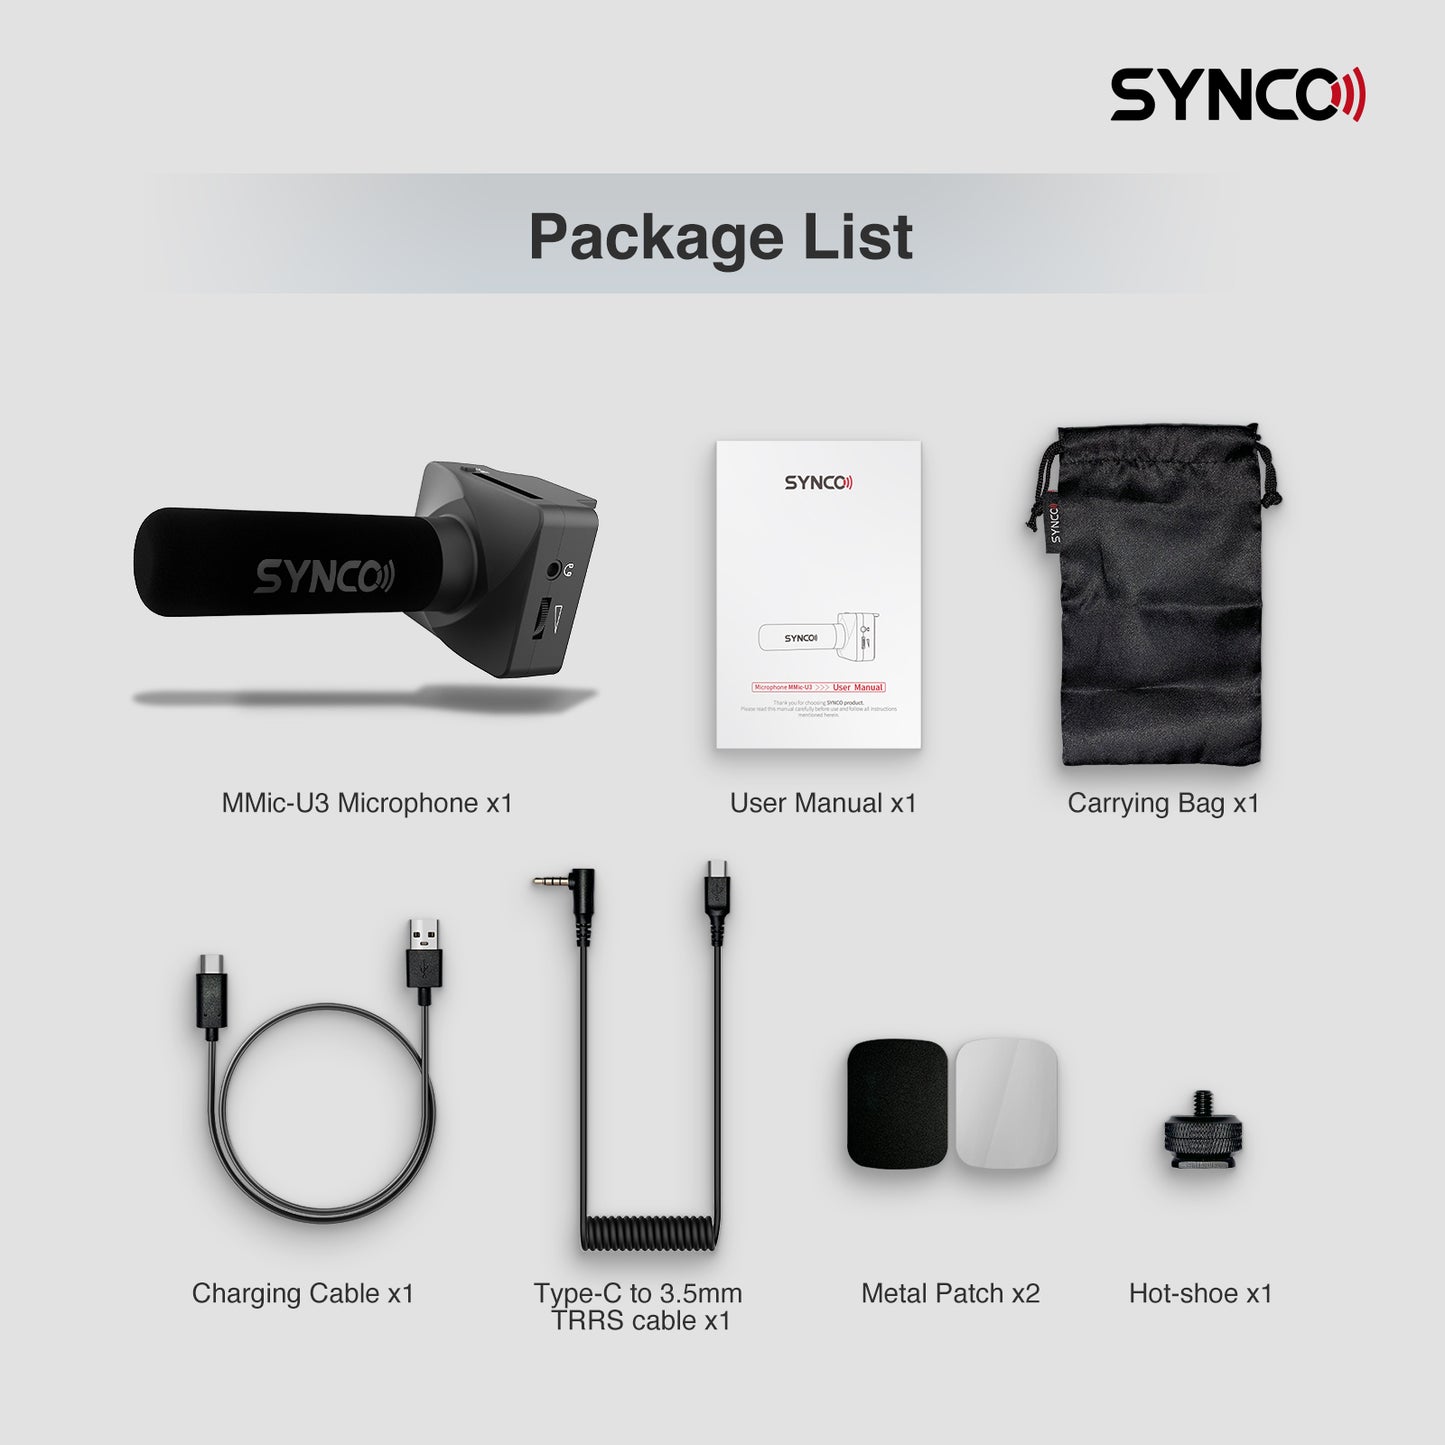 SYNCO MMIC U3 Cardioid Microphone for Smartphone Camera